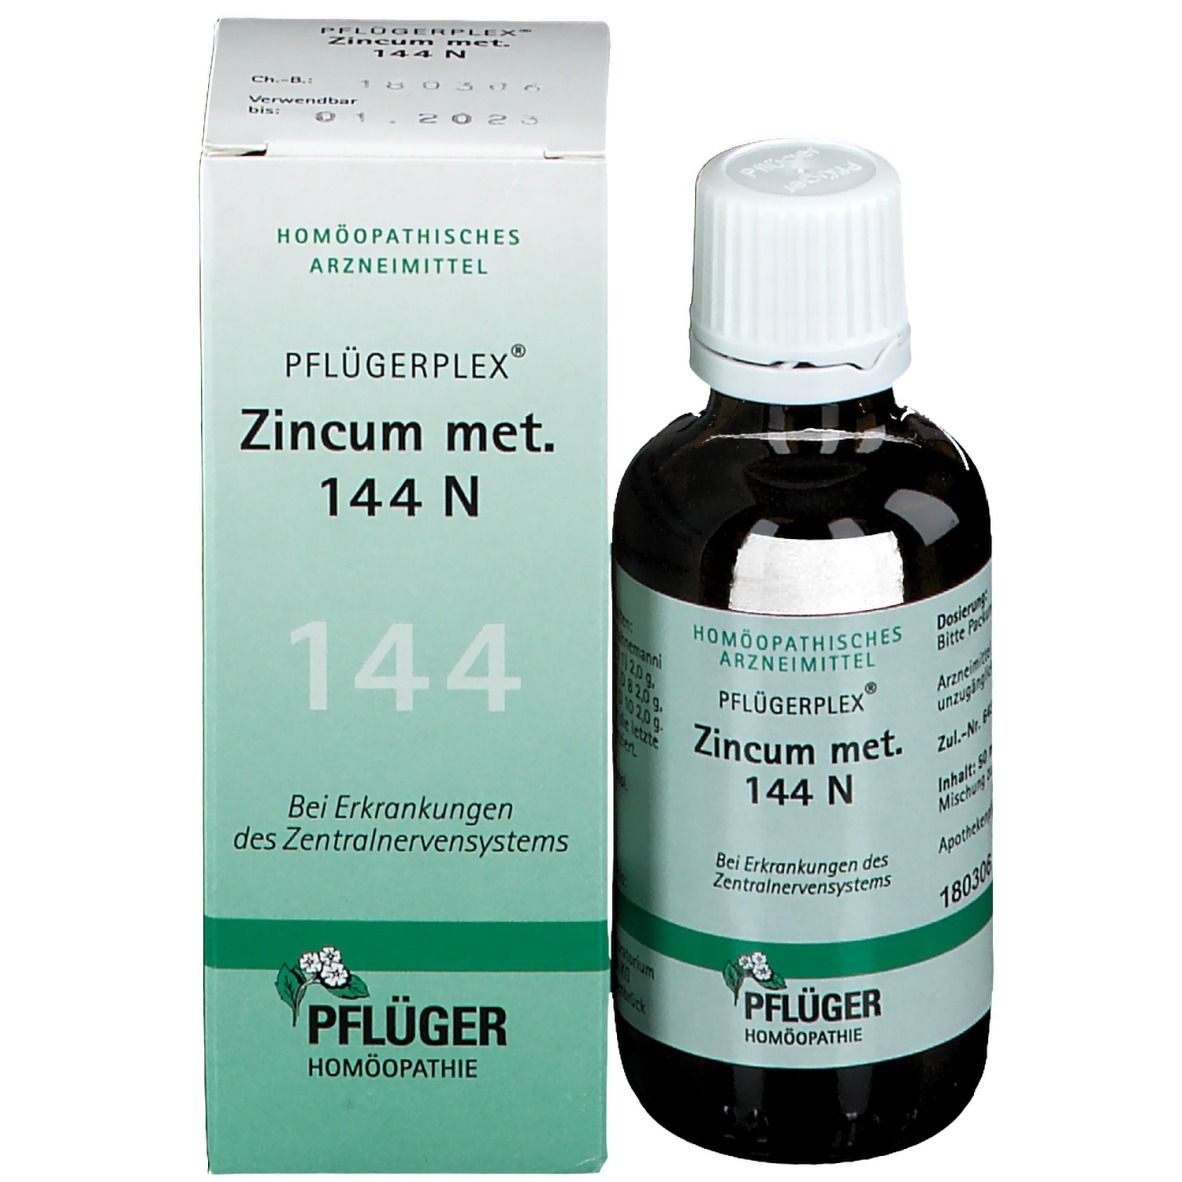 Pflügerplex® Zincum met. 144 N